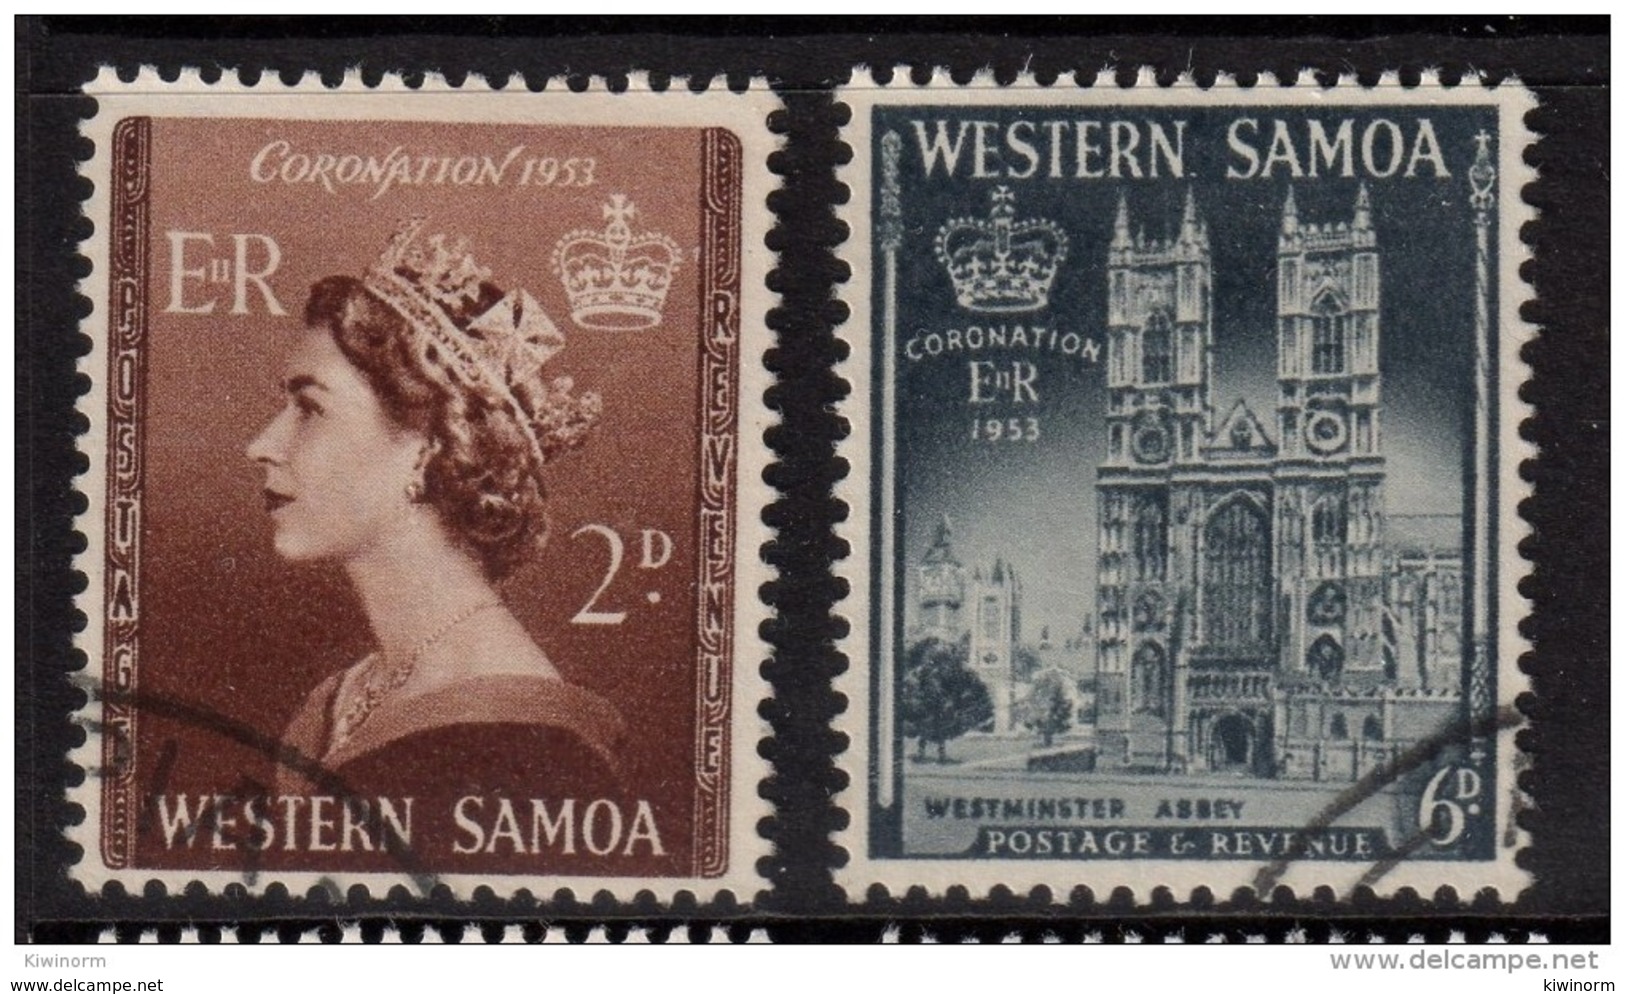 WESTERN SAMOA 1953 Coronation Omnibus - Very Fine Used - VFU 7B1259 - Samoa